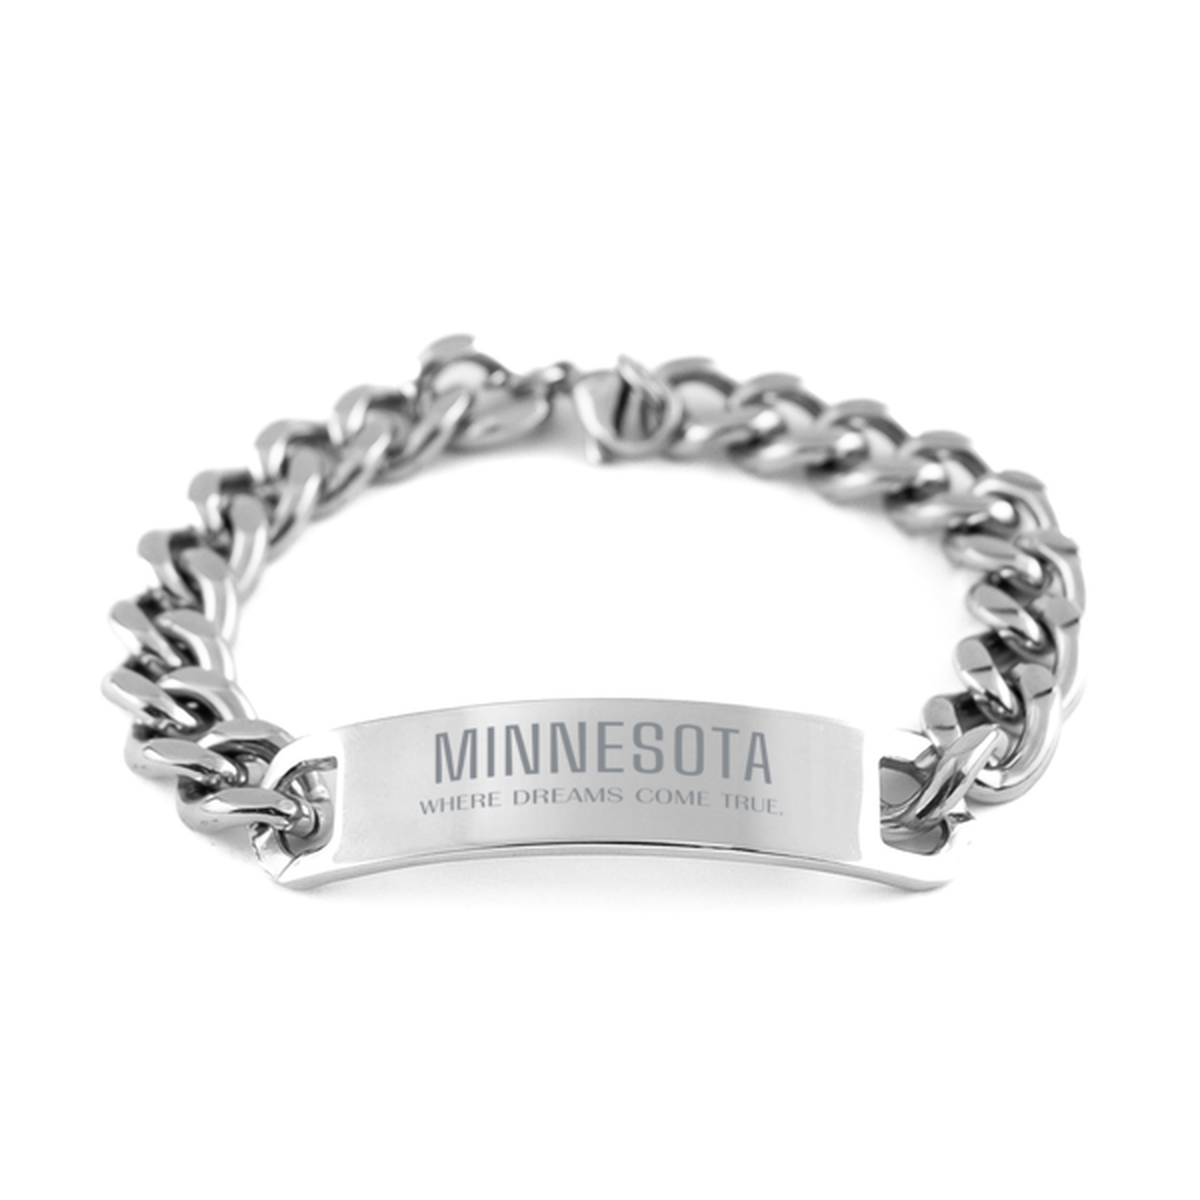 Love Minnesota State Cuban Chain Stainless Steel Bracelet, Minnesota Where dreams come true, Birthday Inspirational Gifts For Minnesota Men, Women, Friends